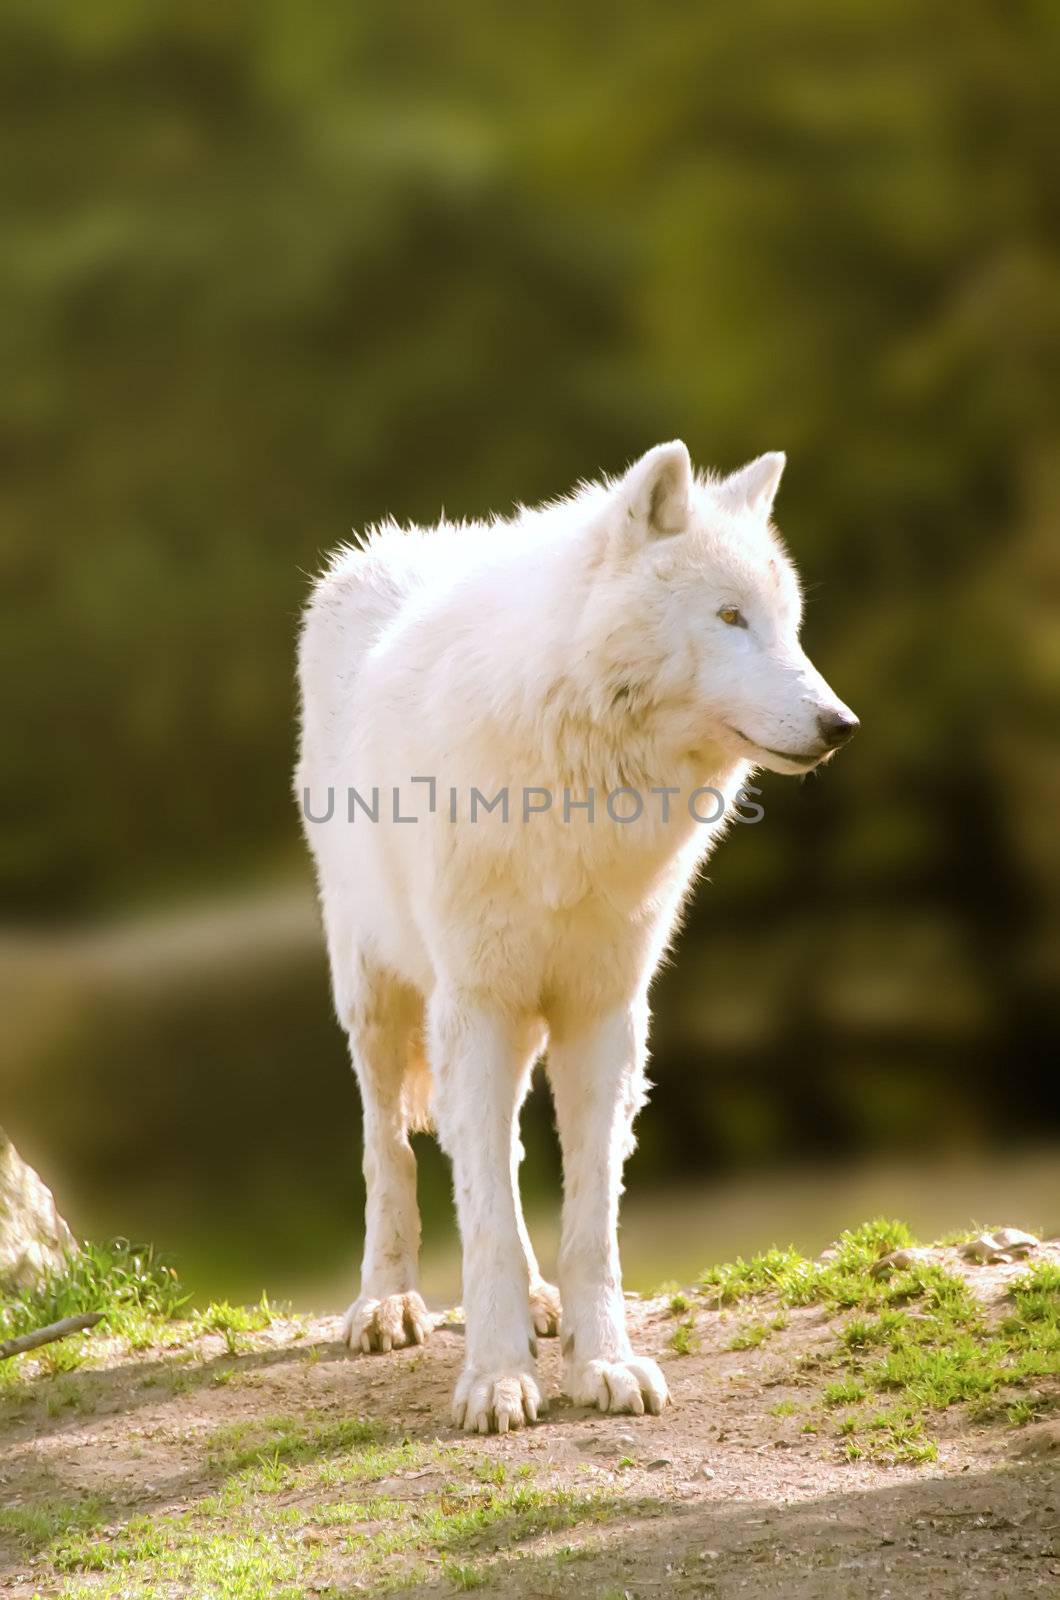 the white wolf by njaj